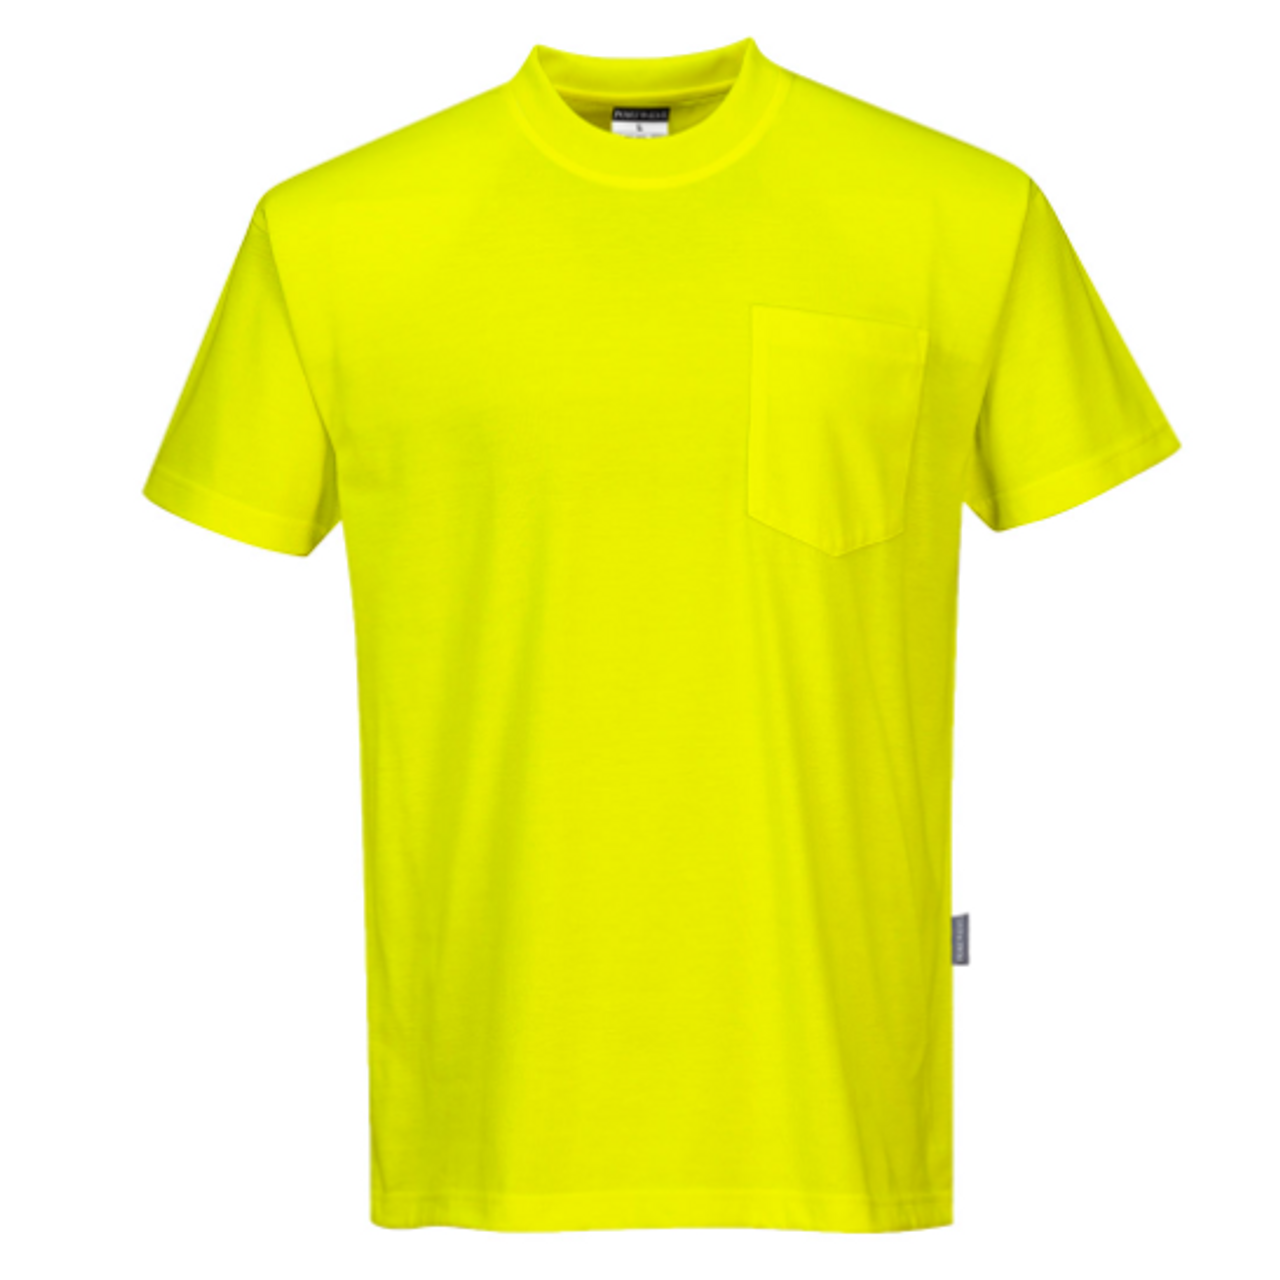 S577 - Non ANSI Cotton Blend T-Shirt, Yellow